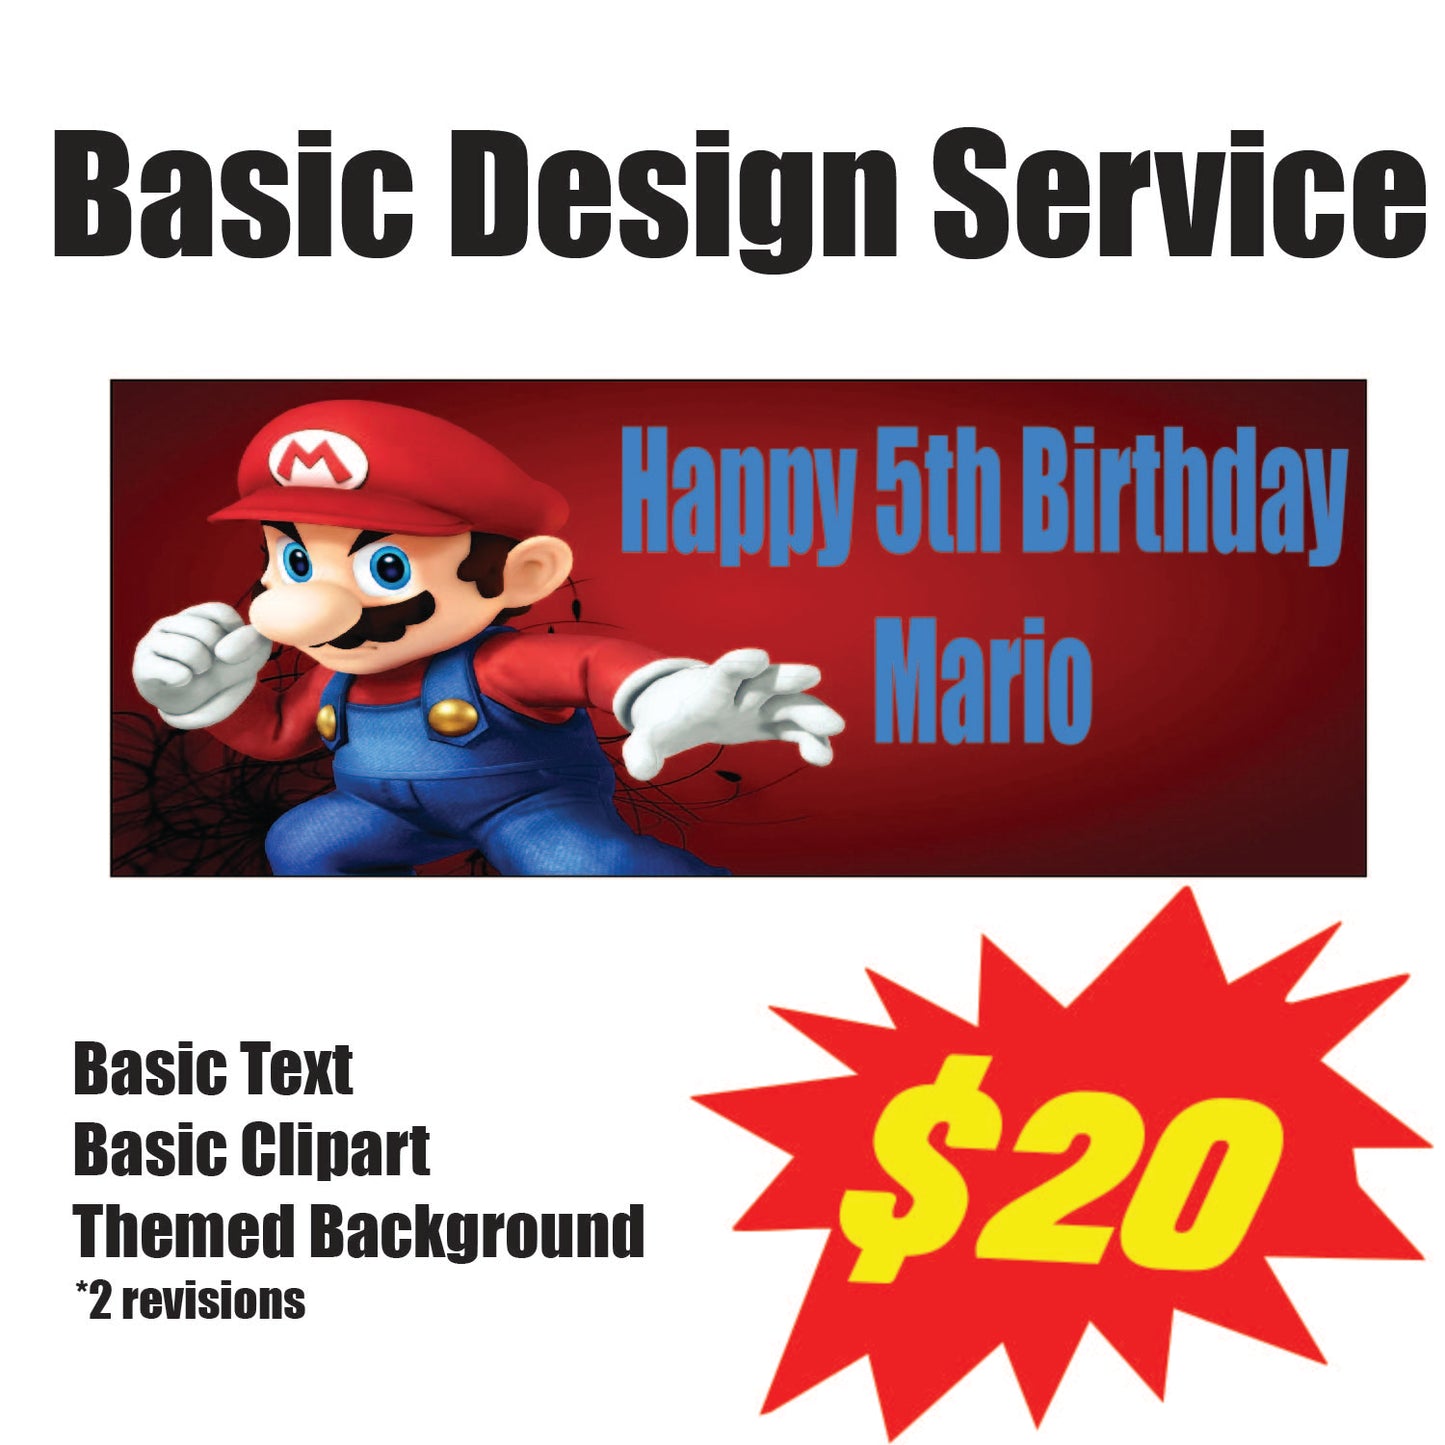 Basic Design Service